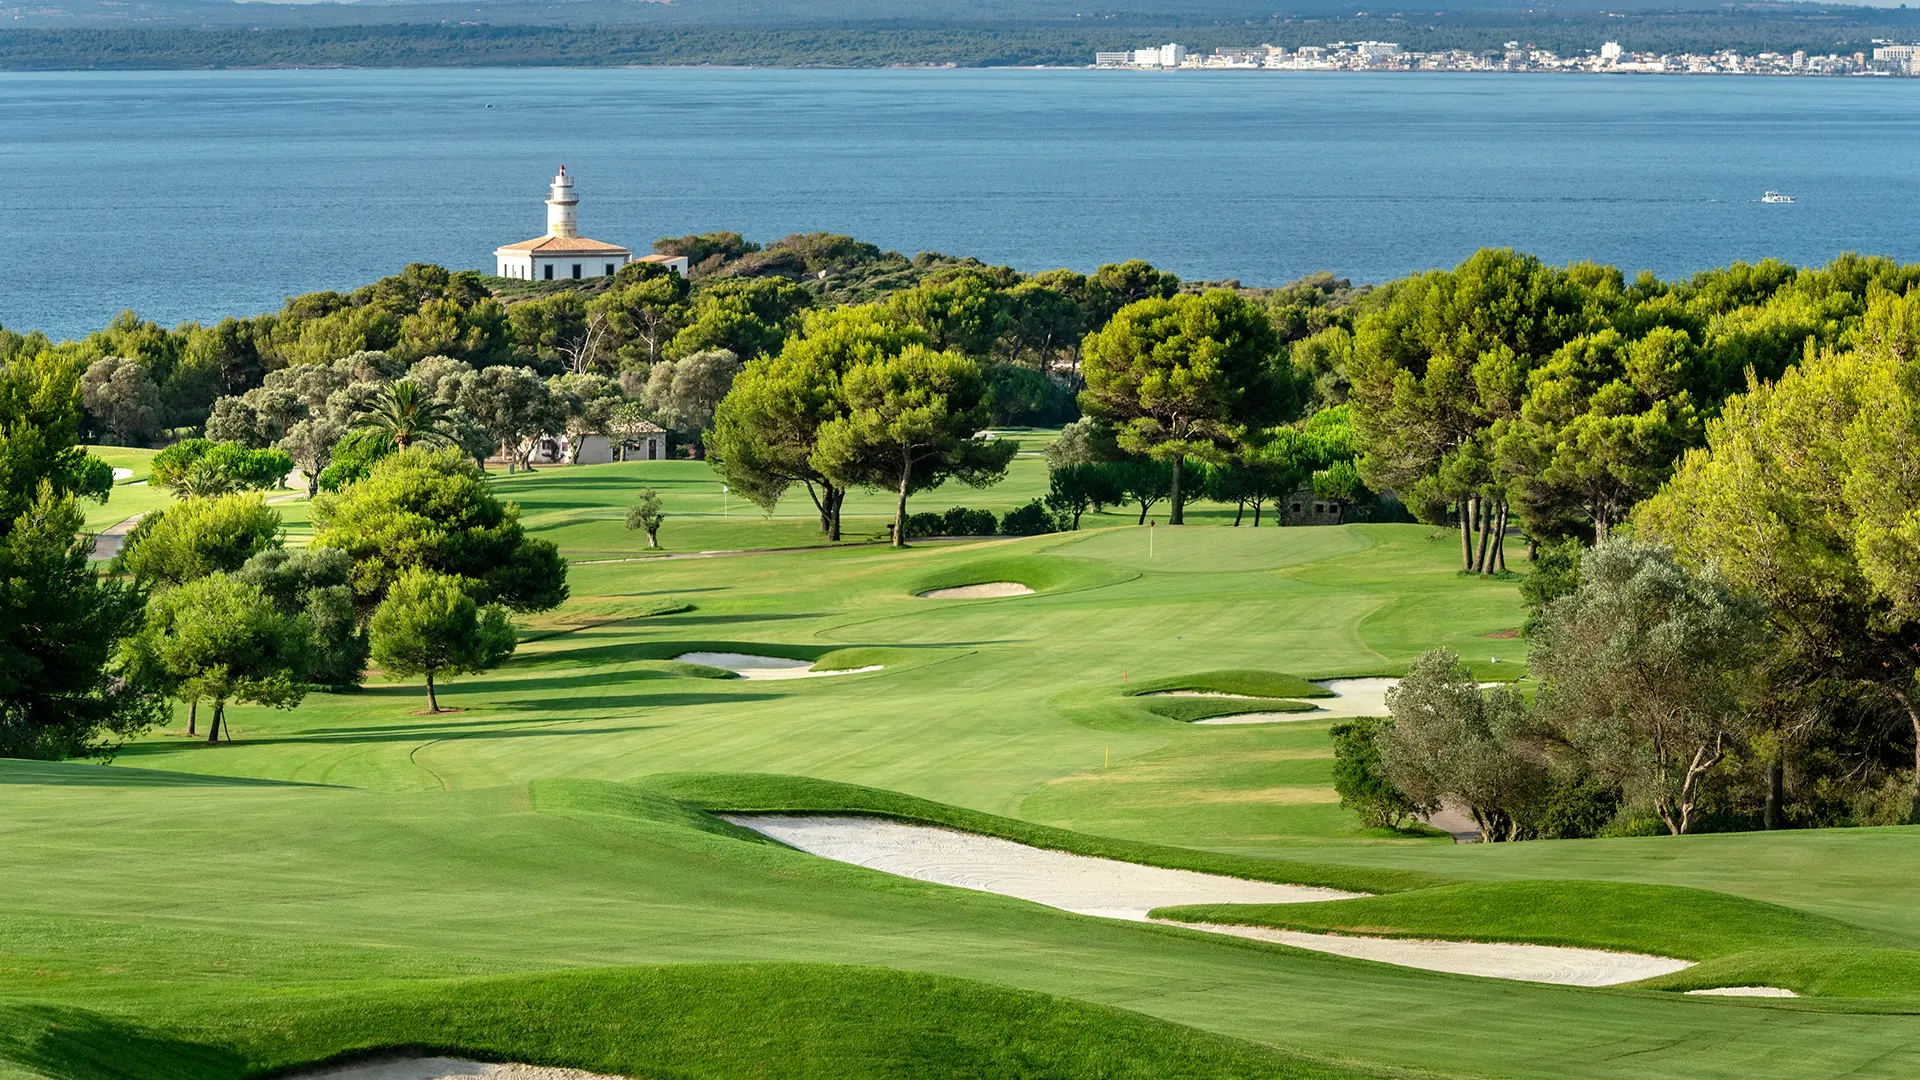 Spain golf holidays - Fuerte Marbella - Spain - Photo 2